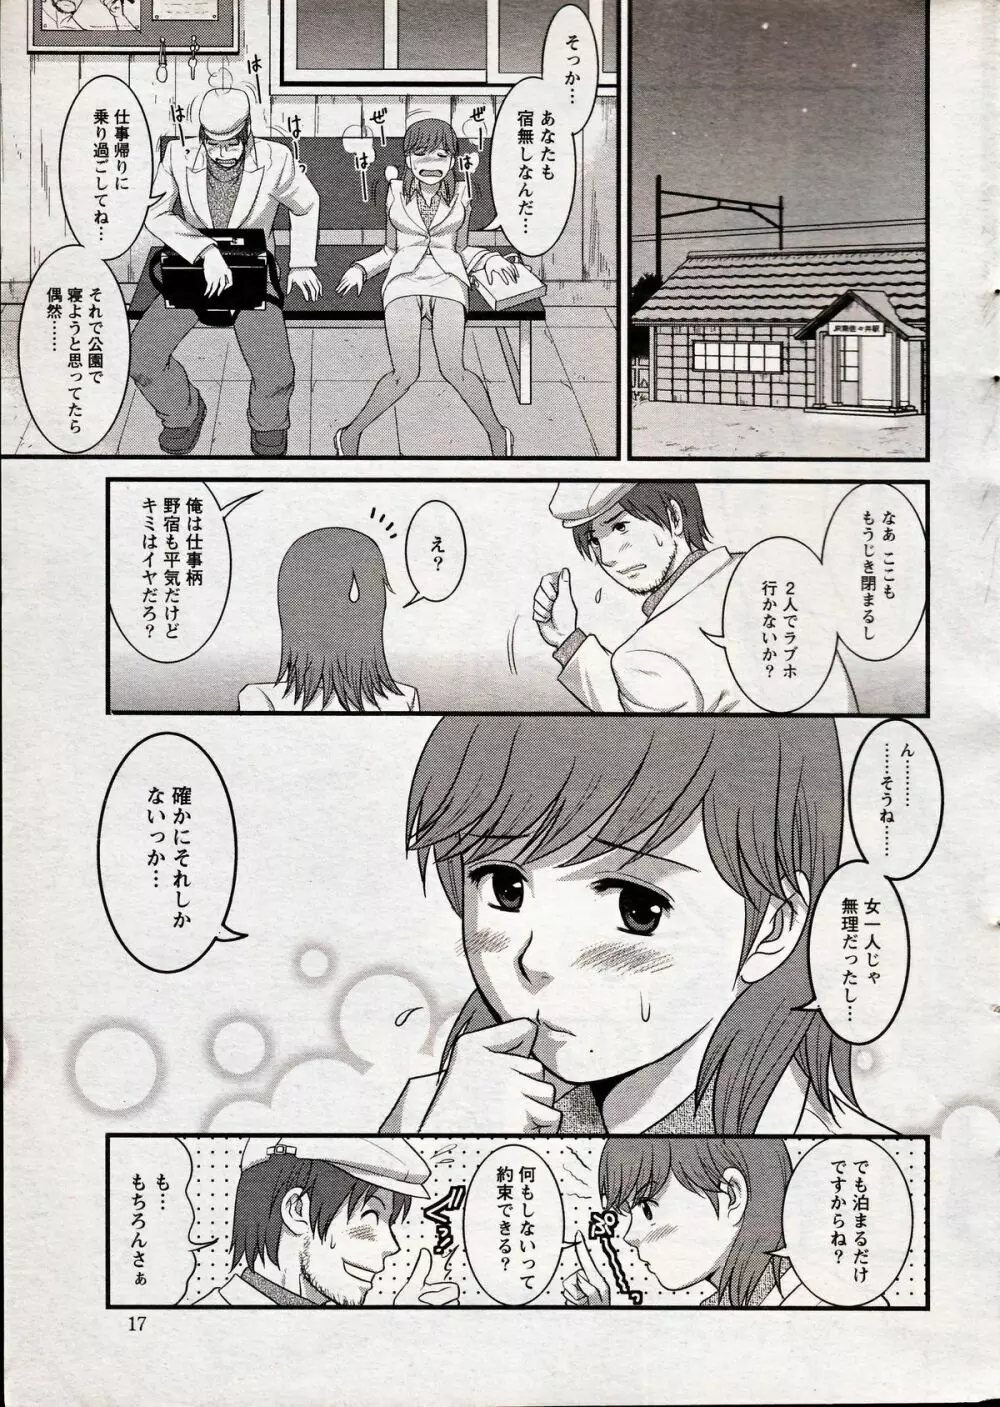 Haken no Muuko-san 15 11ページ